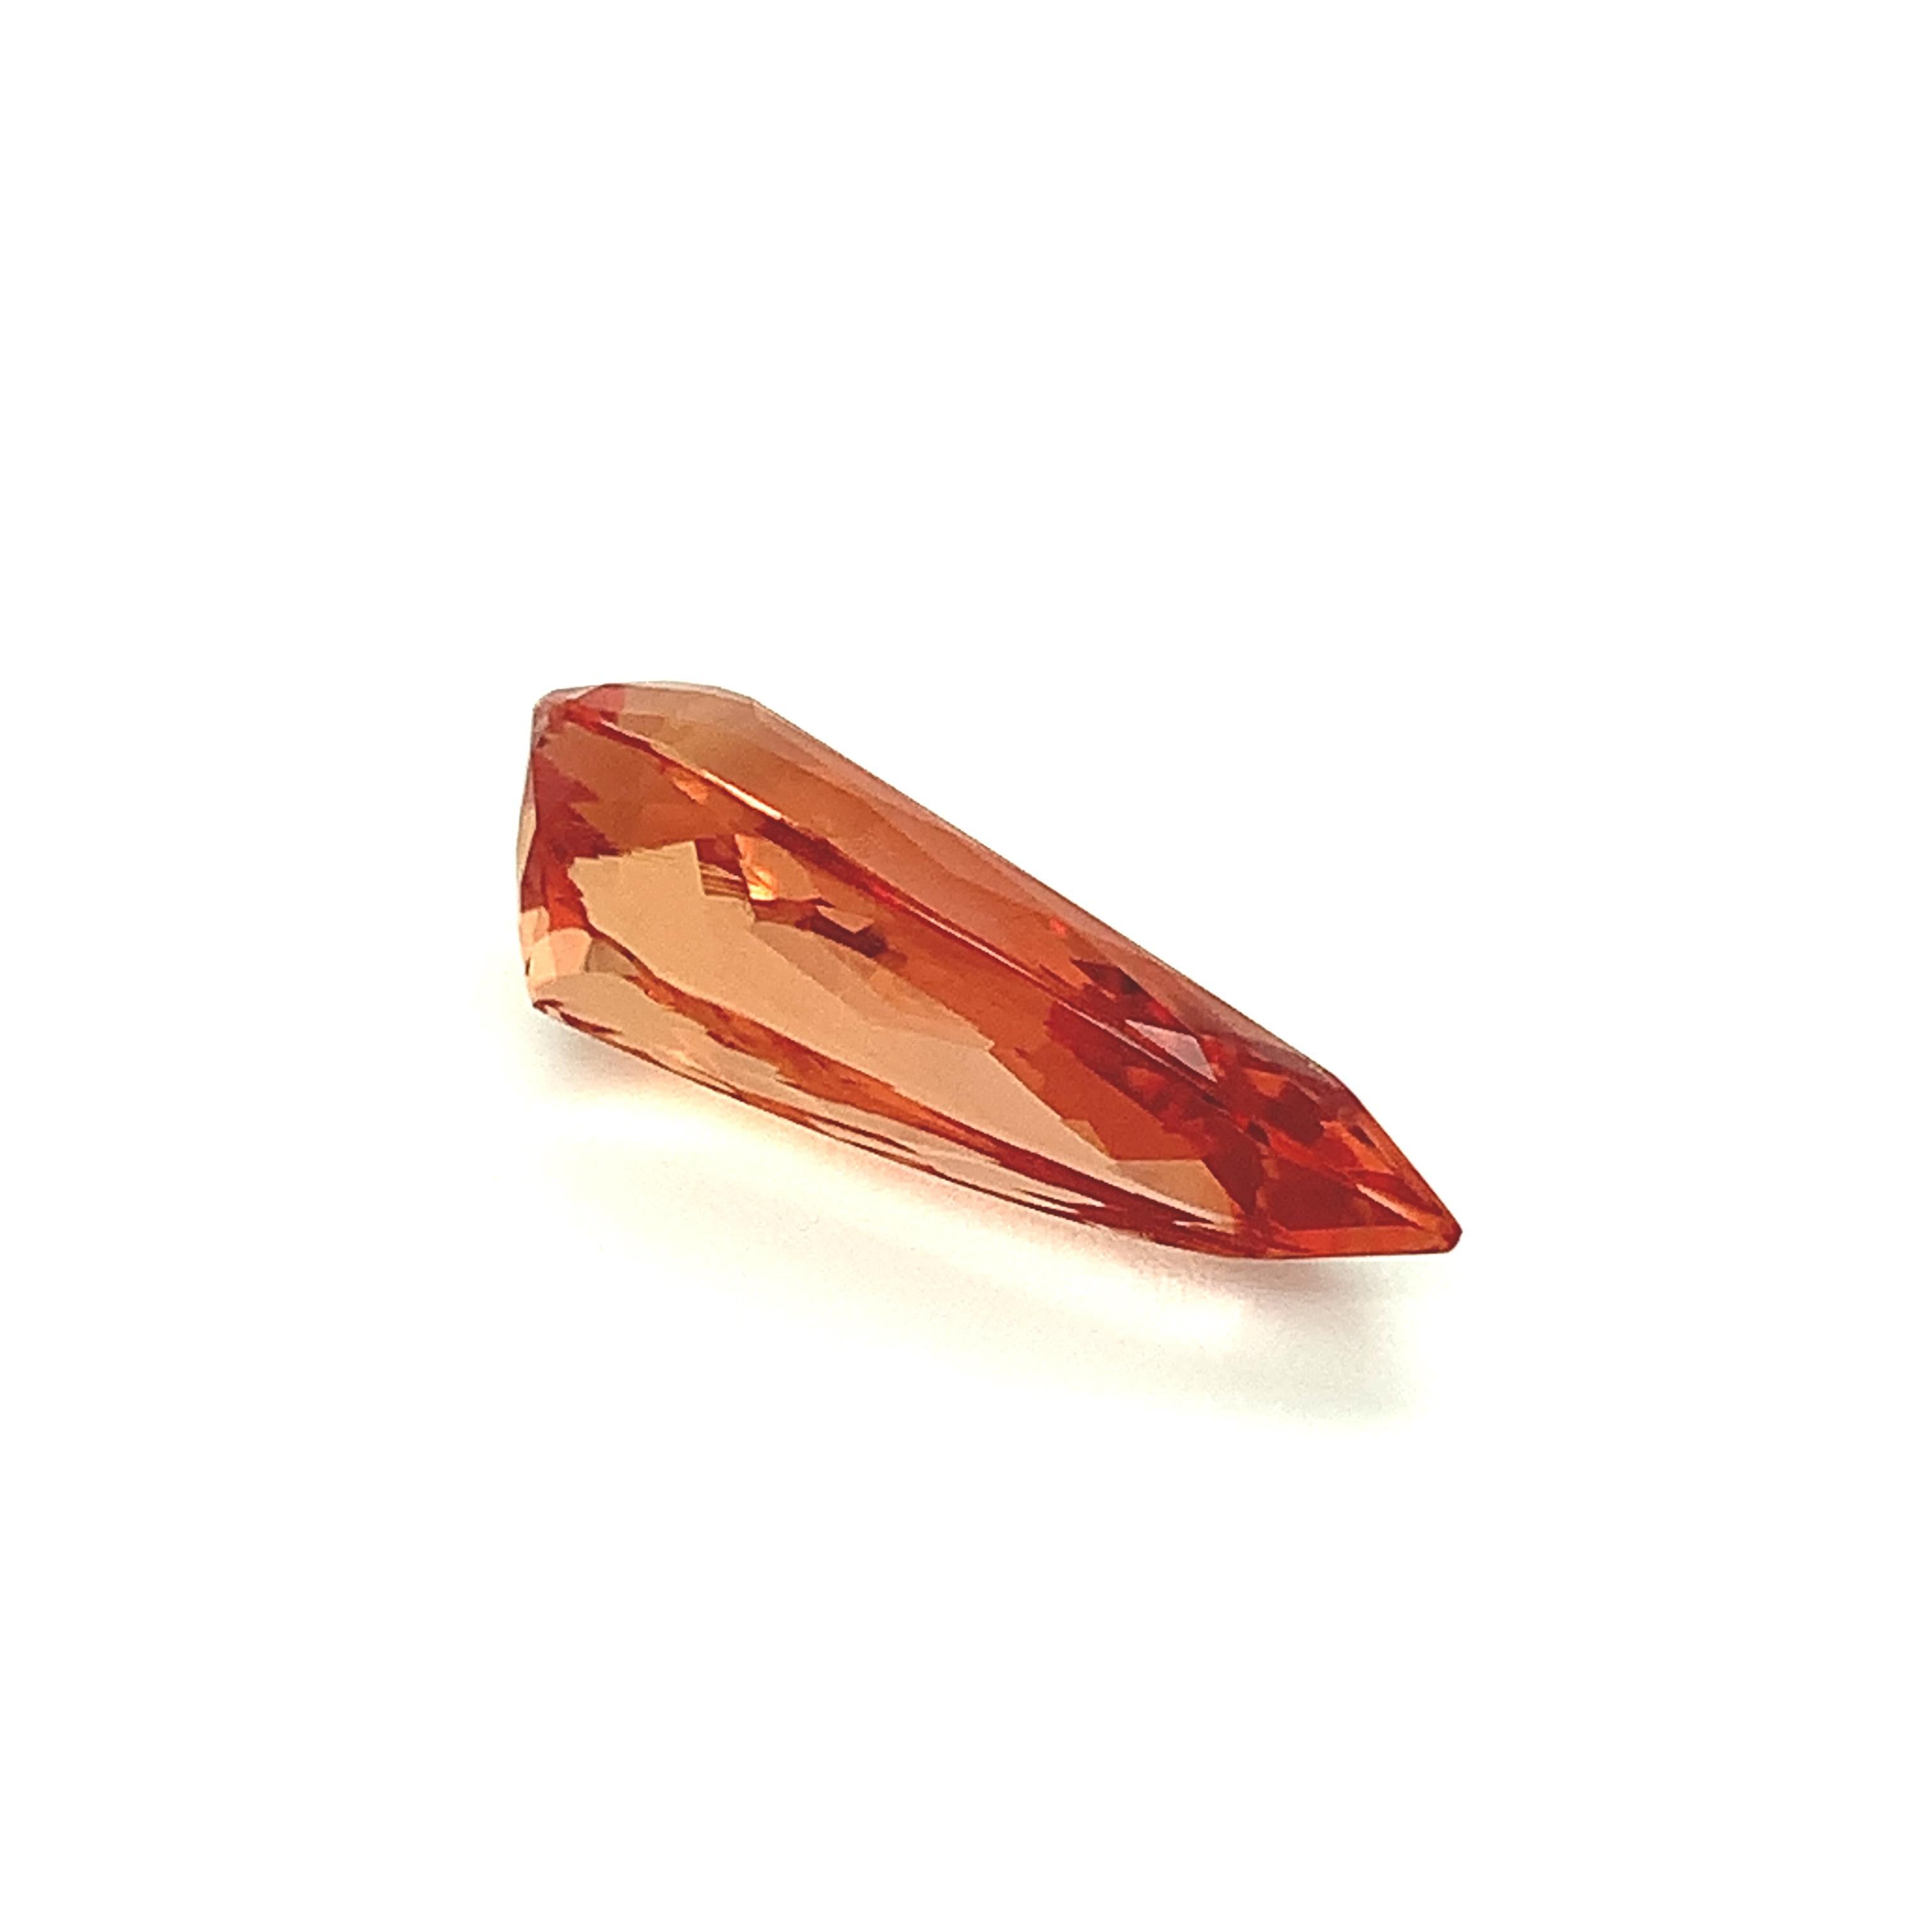 Topaze impériale orange 15,90 carats, pierre précieuse non sertie, certifiée GIA en vente 3